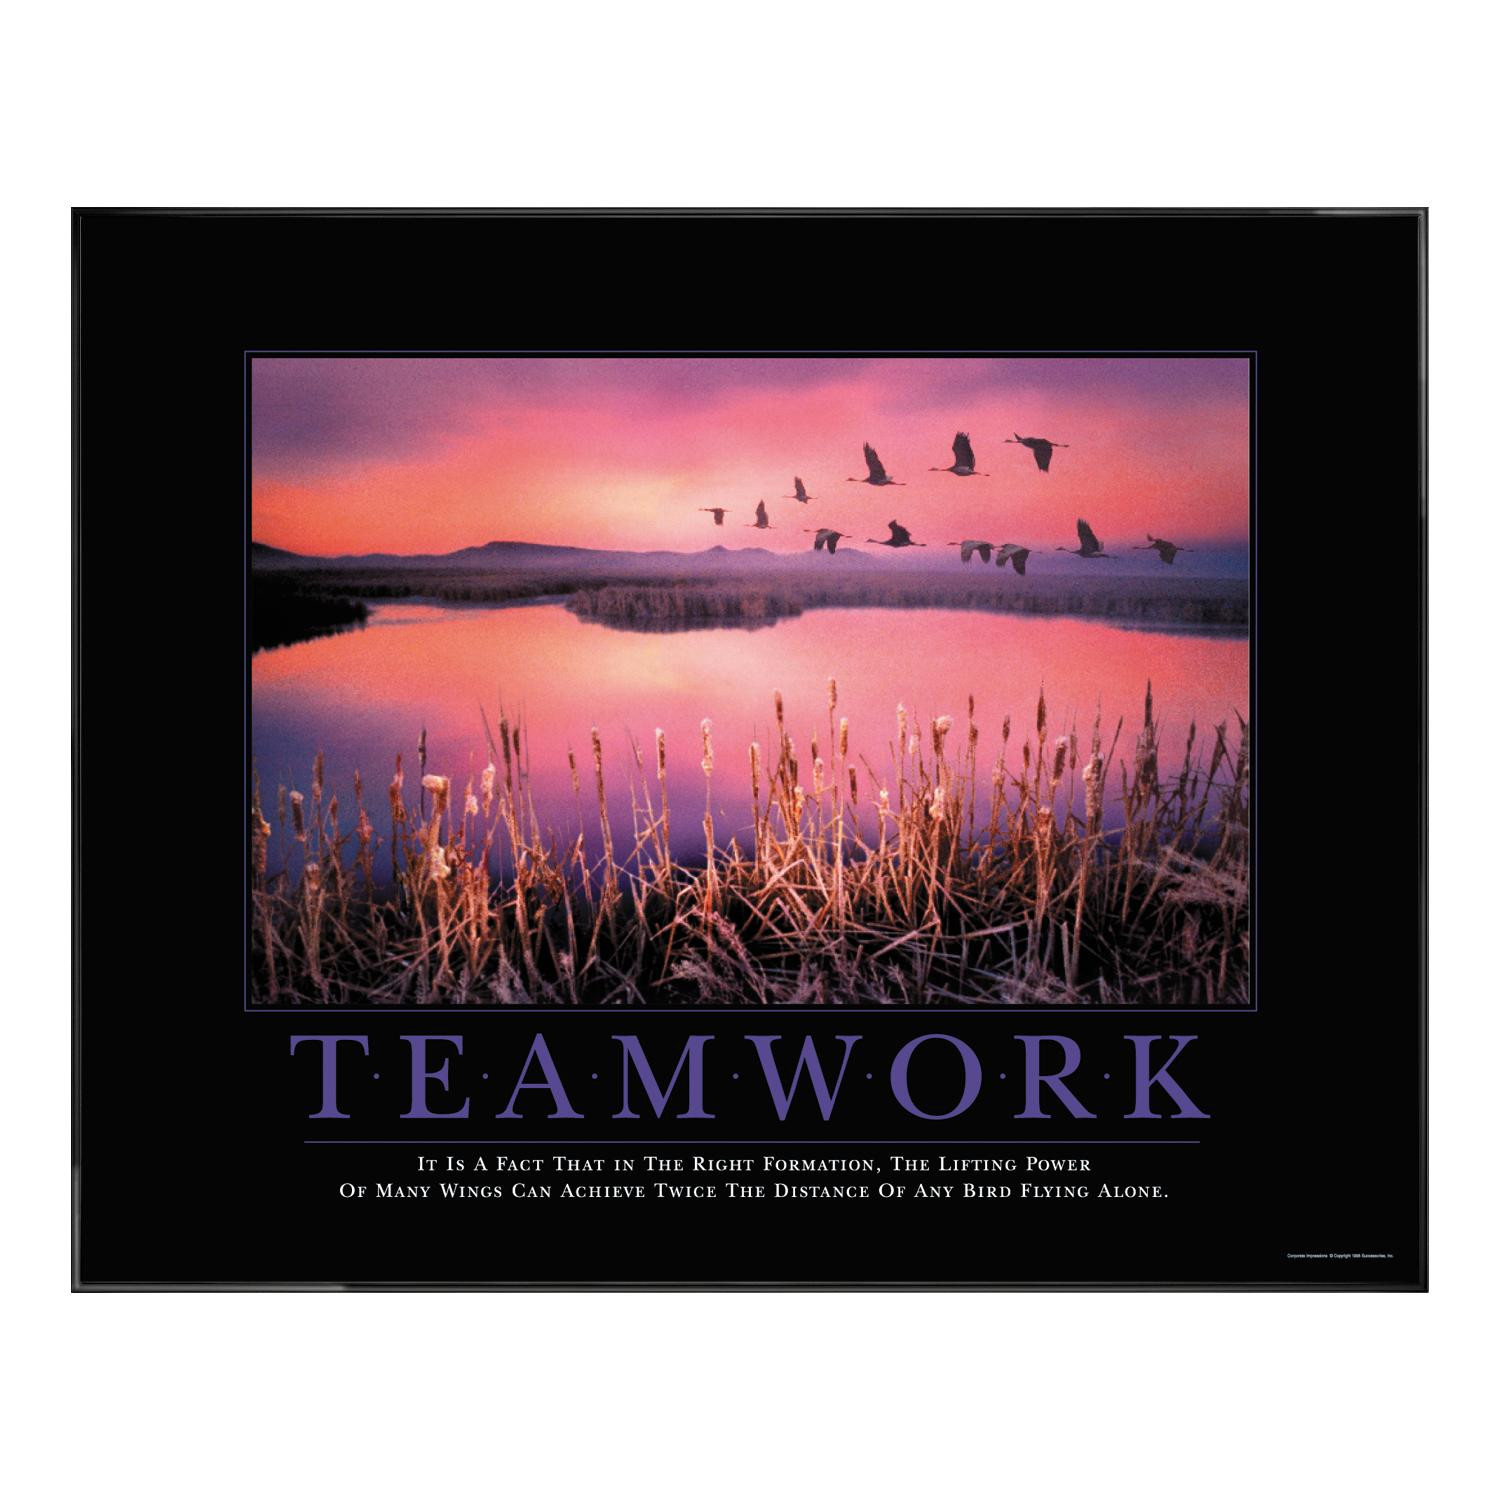 Motivational Teamwork Quotes
 Printable Inspirational Quotes Teamwork QuotesGram